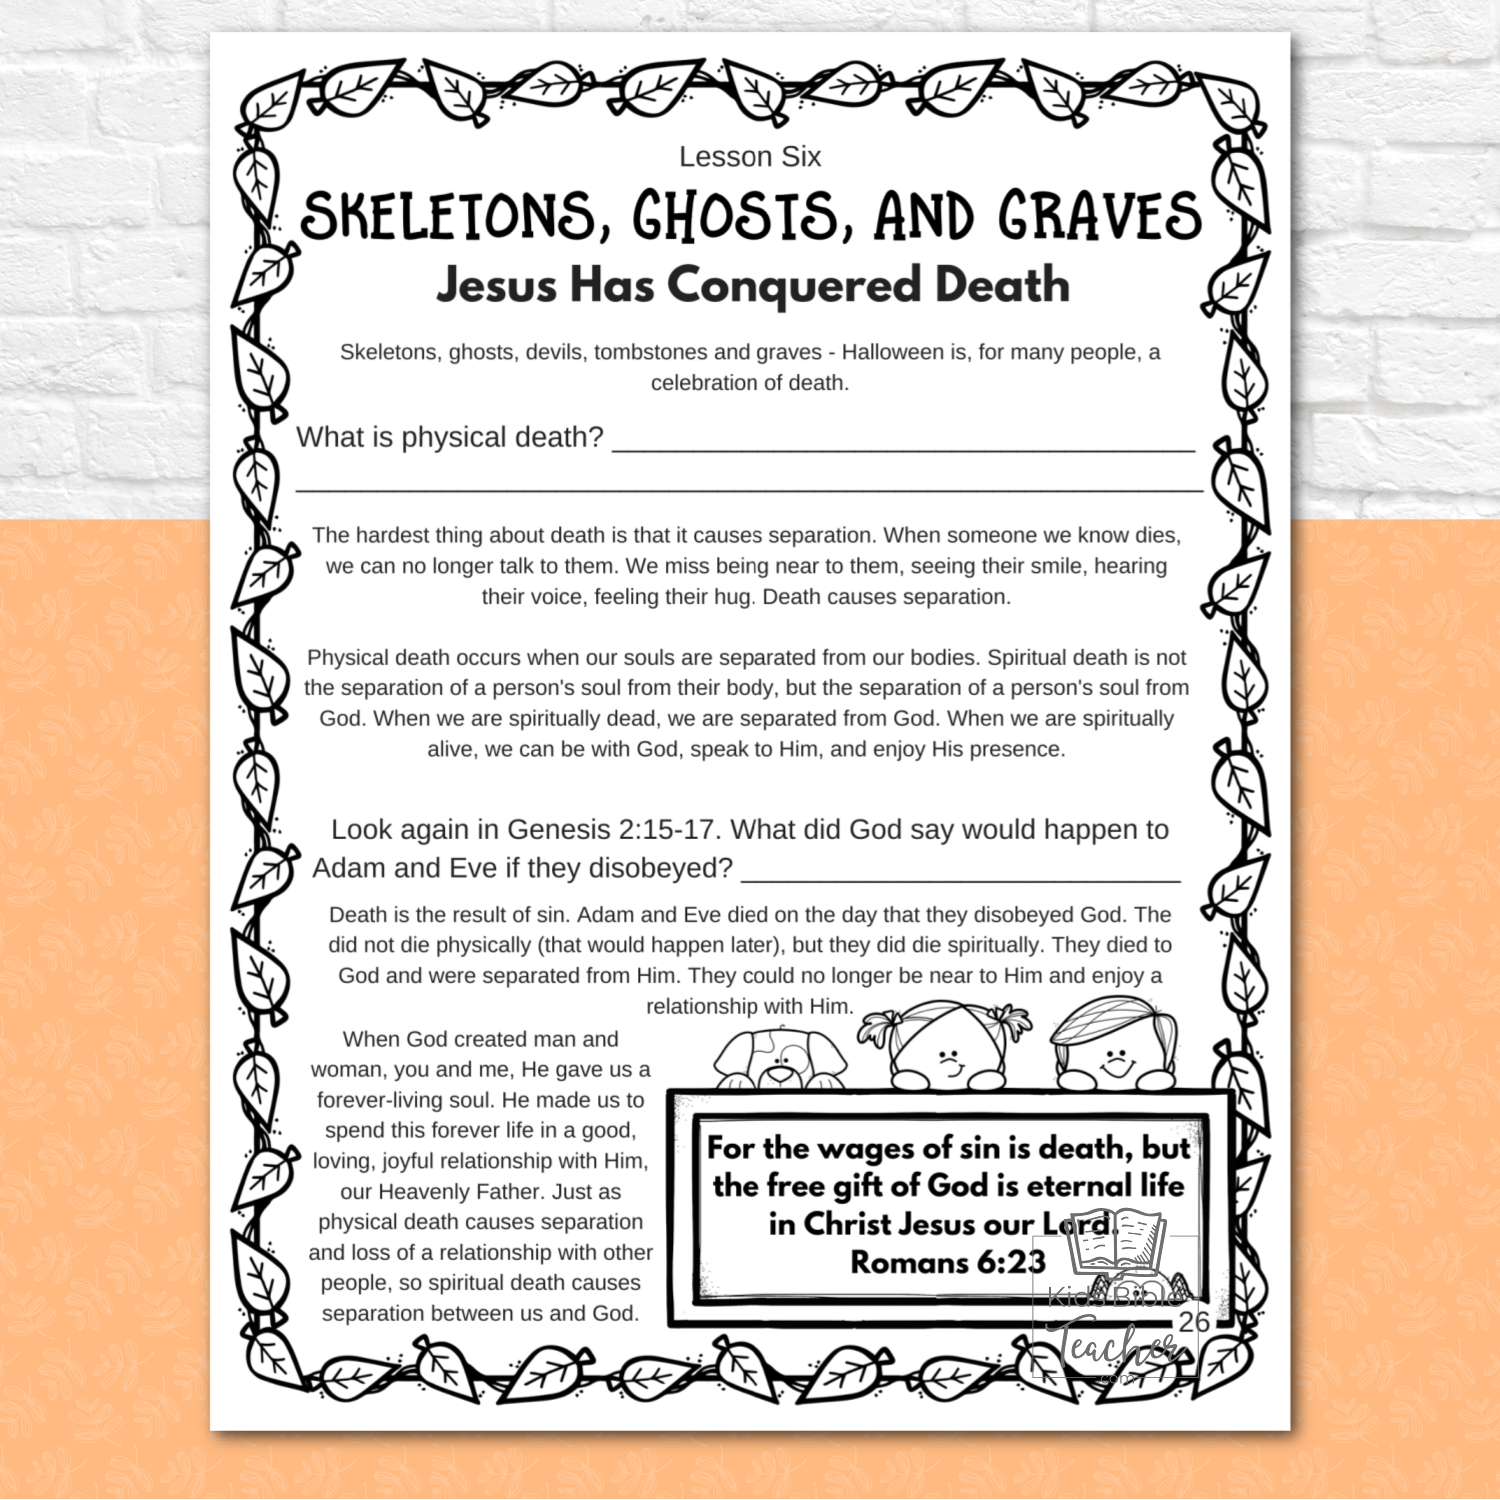 Sweet Opportunity: Seeing the Gospel in Halloween Bible Study Instant DIGITAL Download